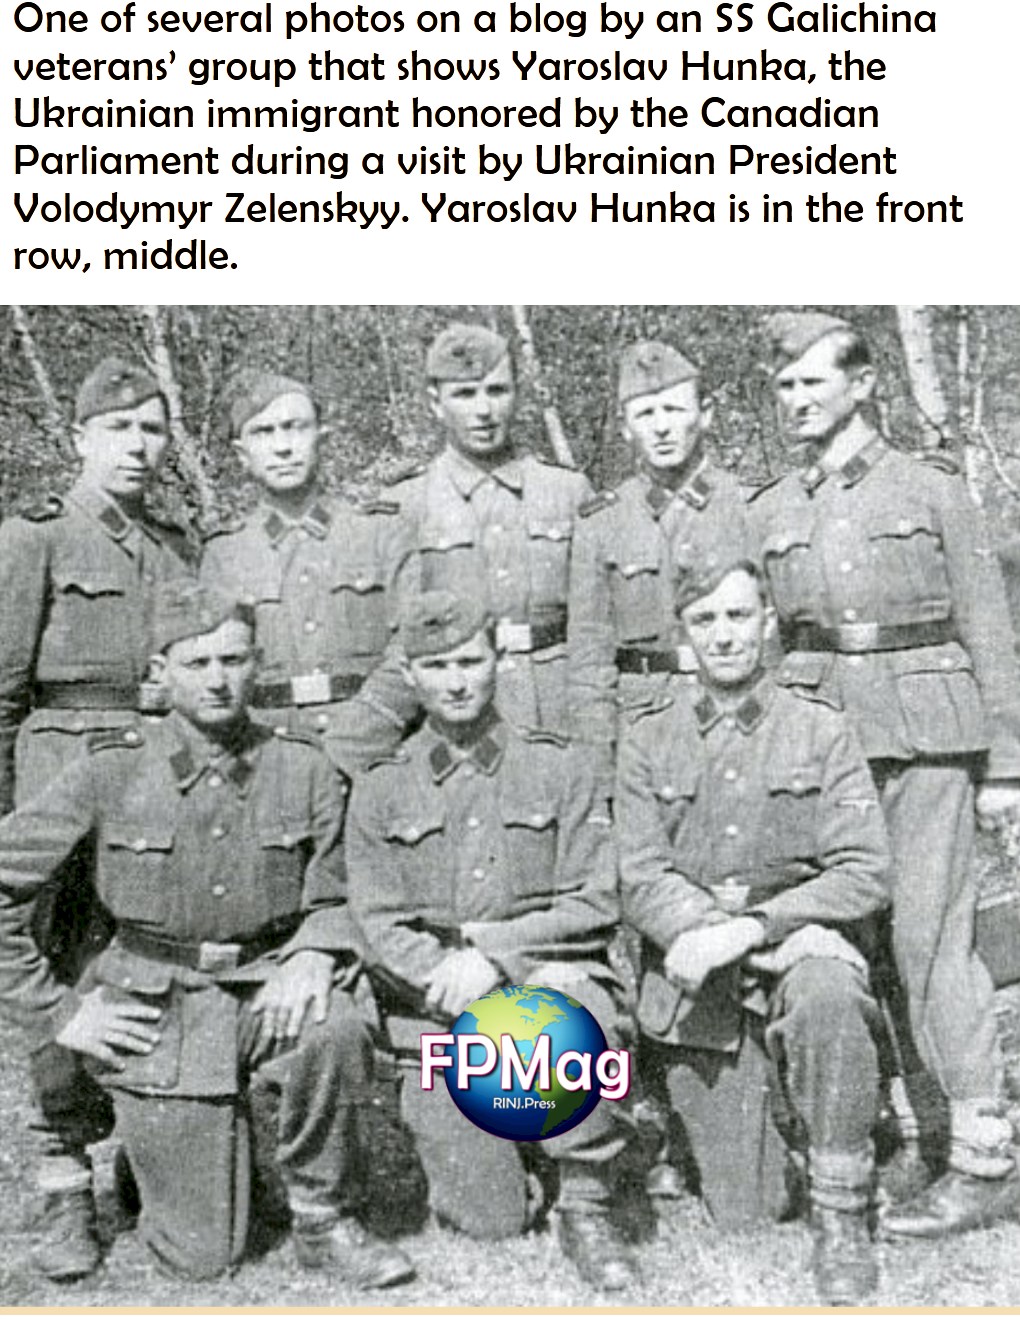 Yaroslav Hunka with his Waffen SS Unit